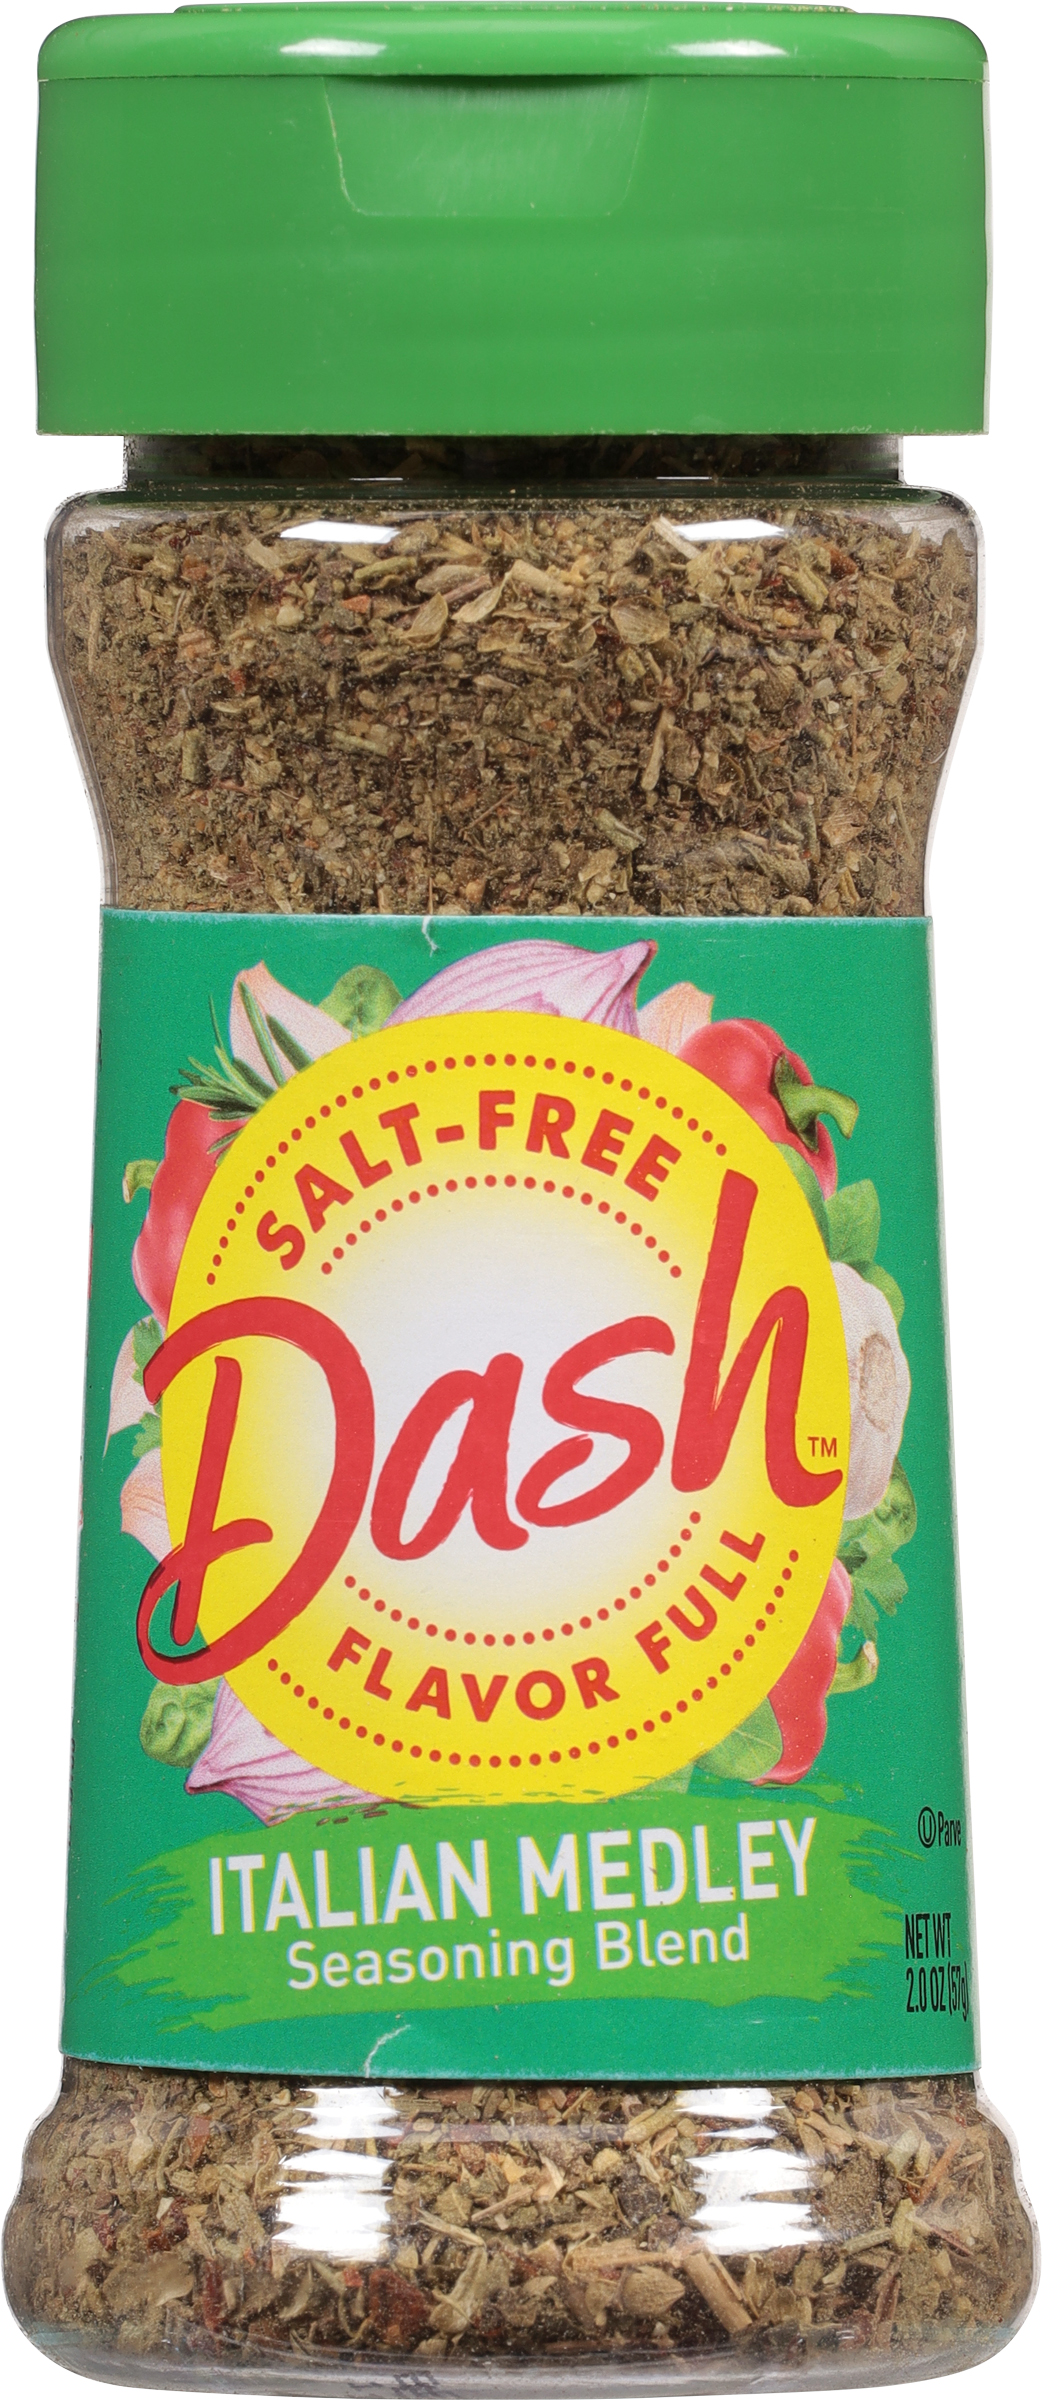 Mrs Dash Seasoning: Nutrition & Ingredients